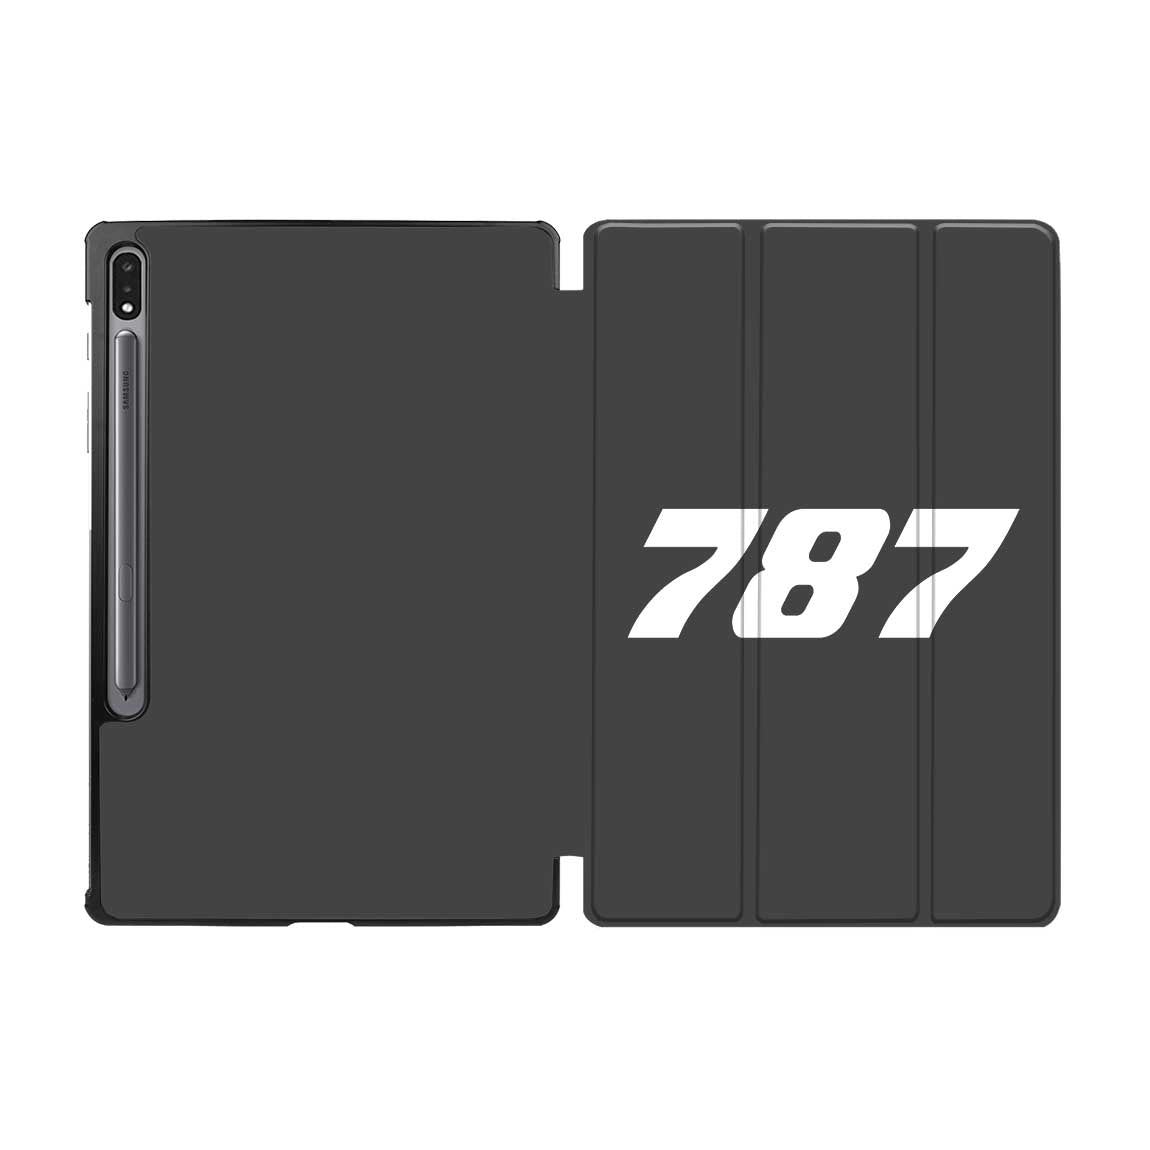 787 Flat Text Designed Samsung Tablet Cases